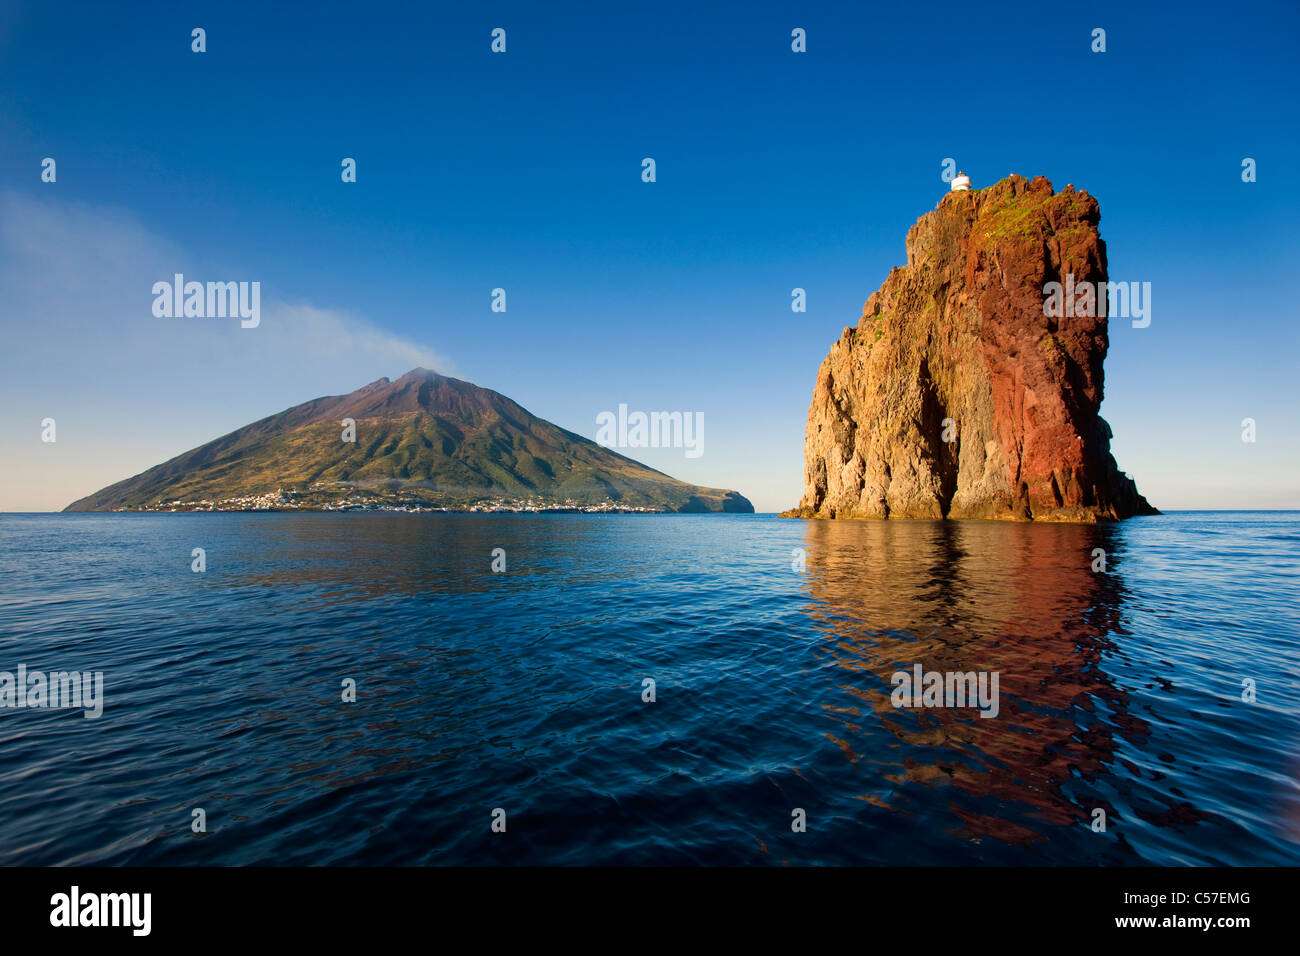 Strombolicchio, Italy, Europe, Lipari Islands, island, isle, volcano chimney, volcano rest, sea, Mediterranean Sea, erosion, dec Stock Photo